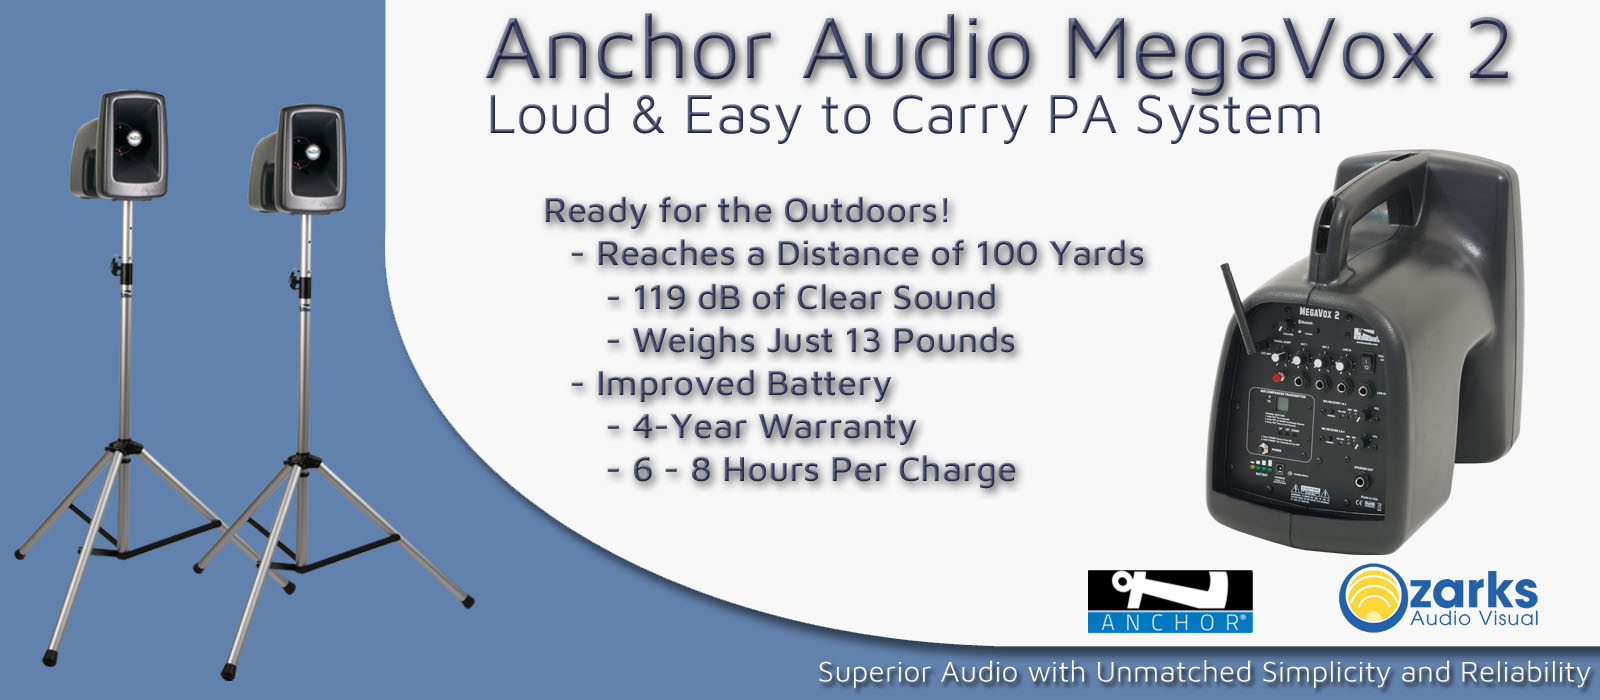 Anchor Audio MegaVox 2